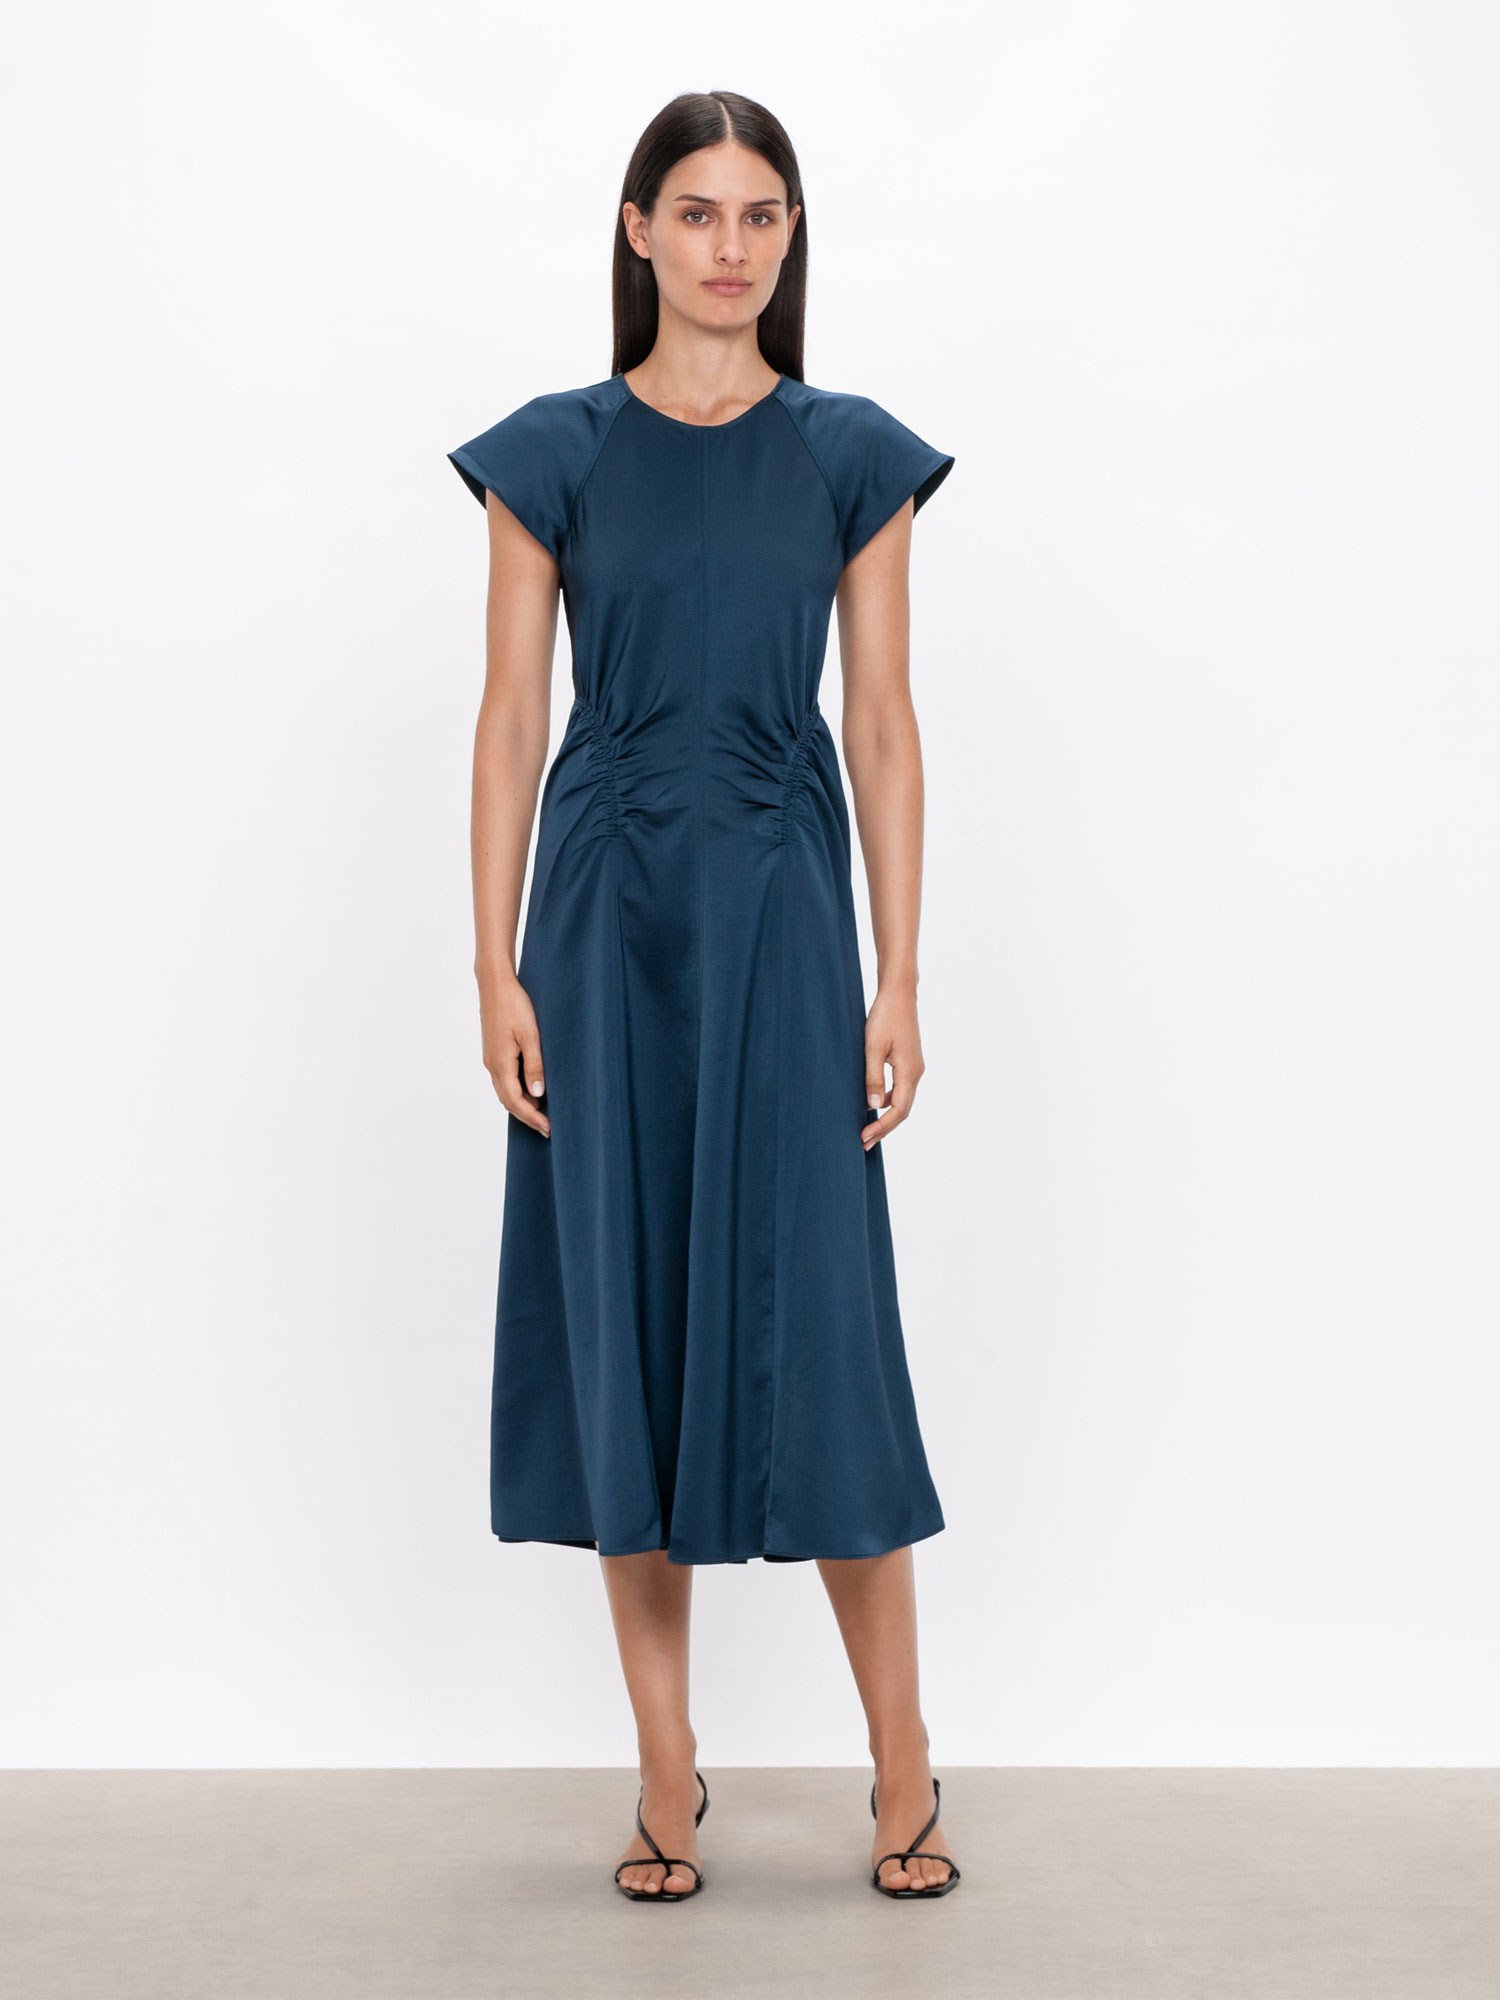 Washer Satin Gathered Dress | Buy Dresses Online - Veronika Maine